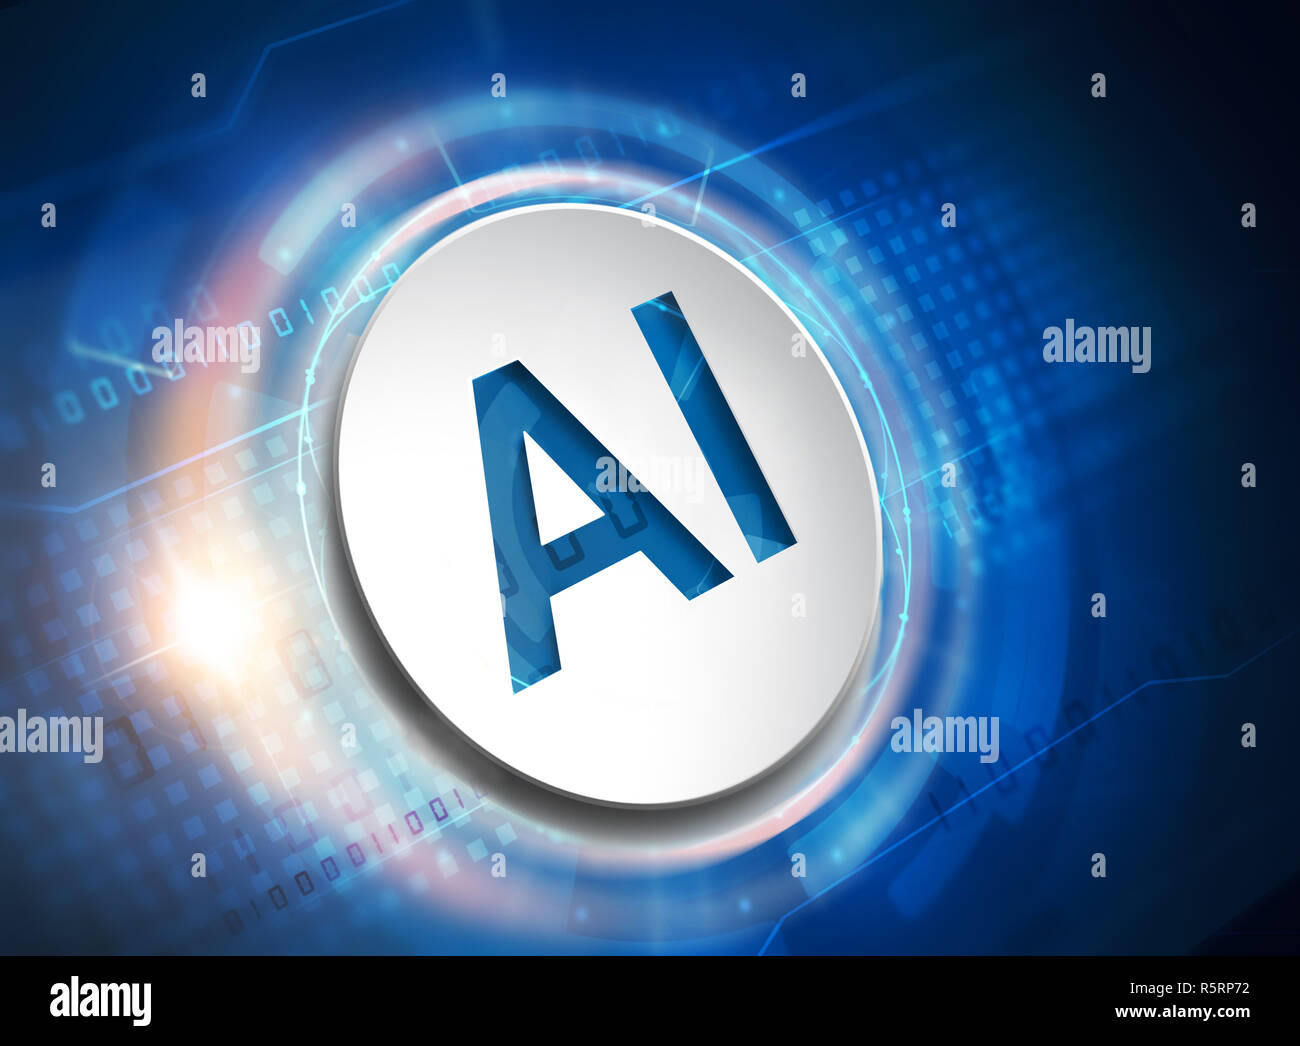 artificial intelligence symbol Stock Photo